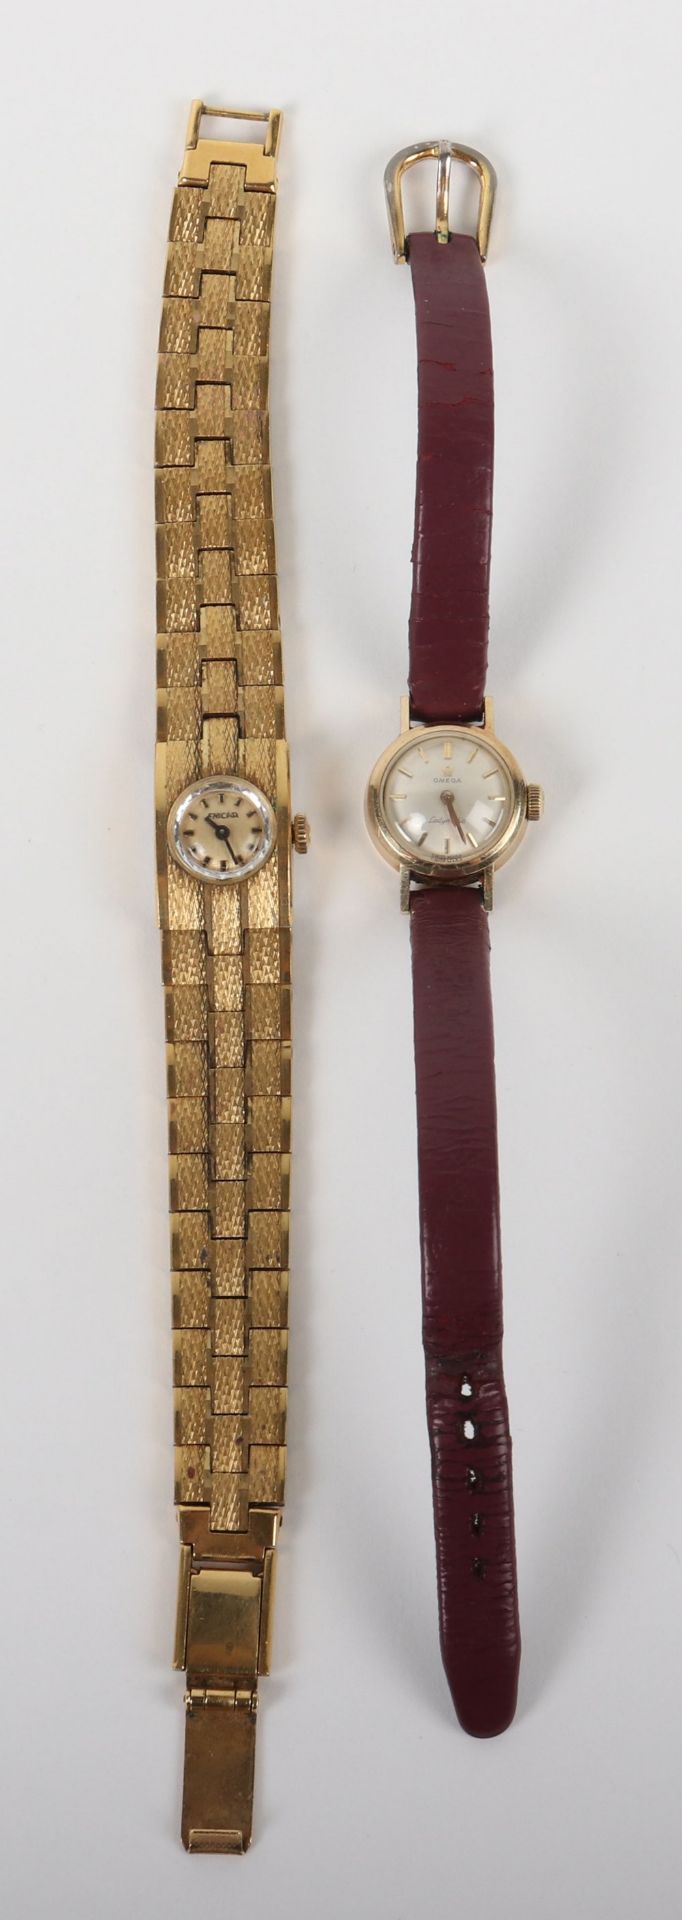 An Omega Ladymatic wristwatch and an Enicar ladies wristwatch